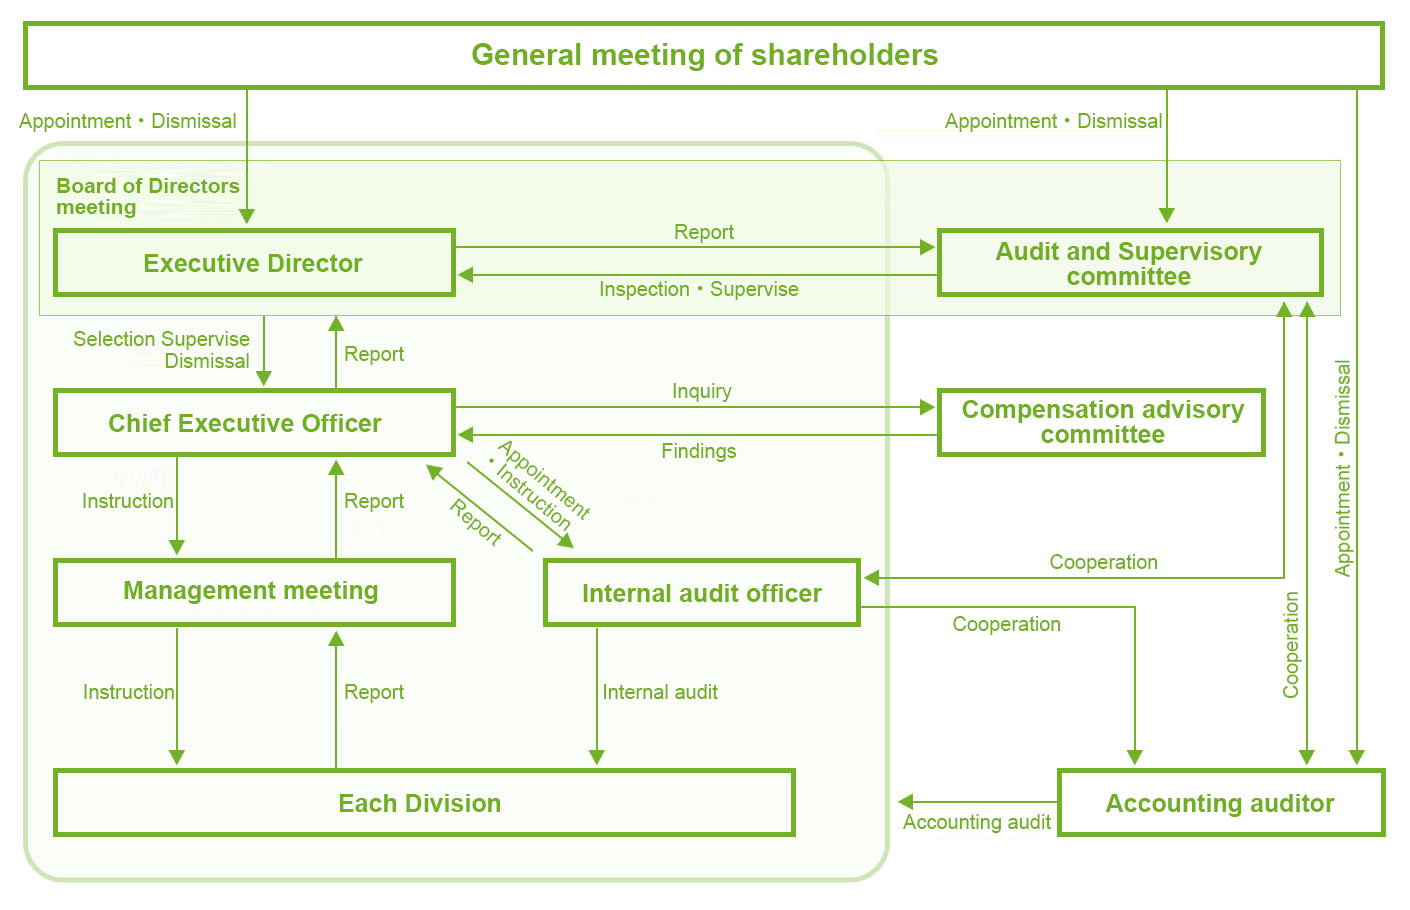 Organization of Corporate Governance